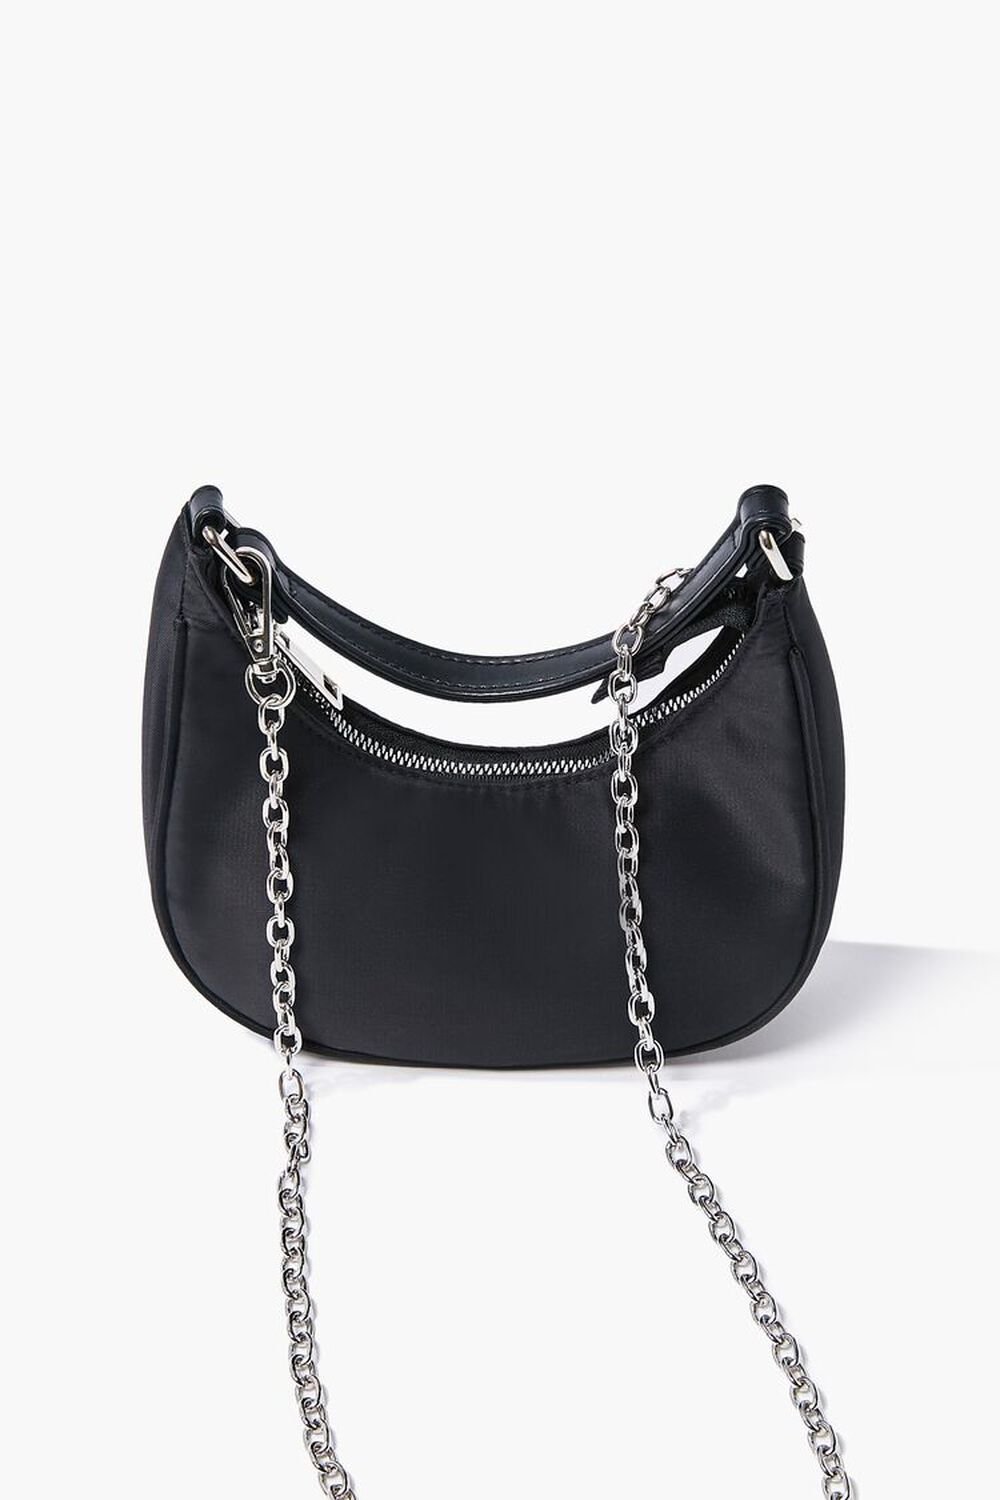 BLACK Nylon Crossbody Bag, image 1